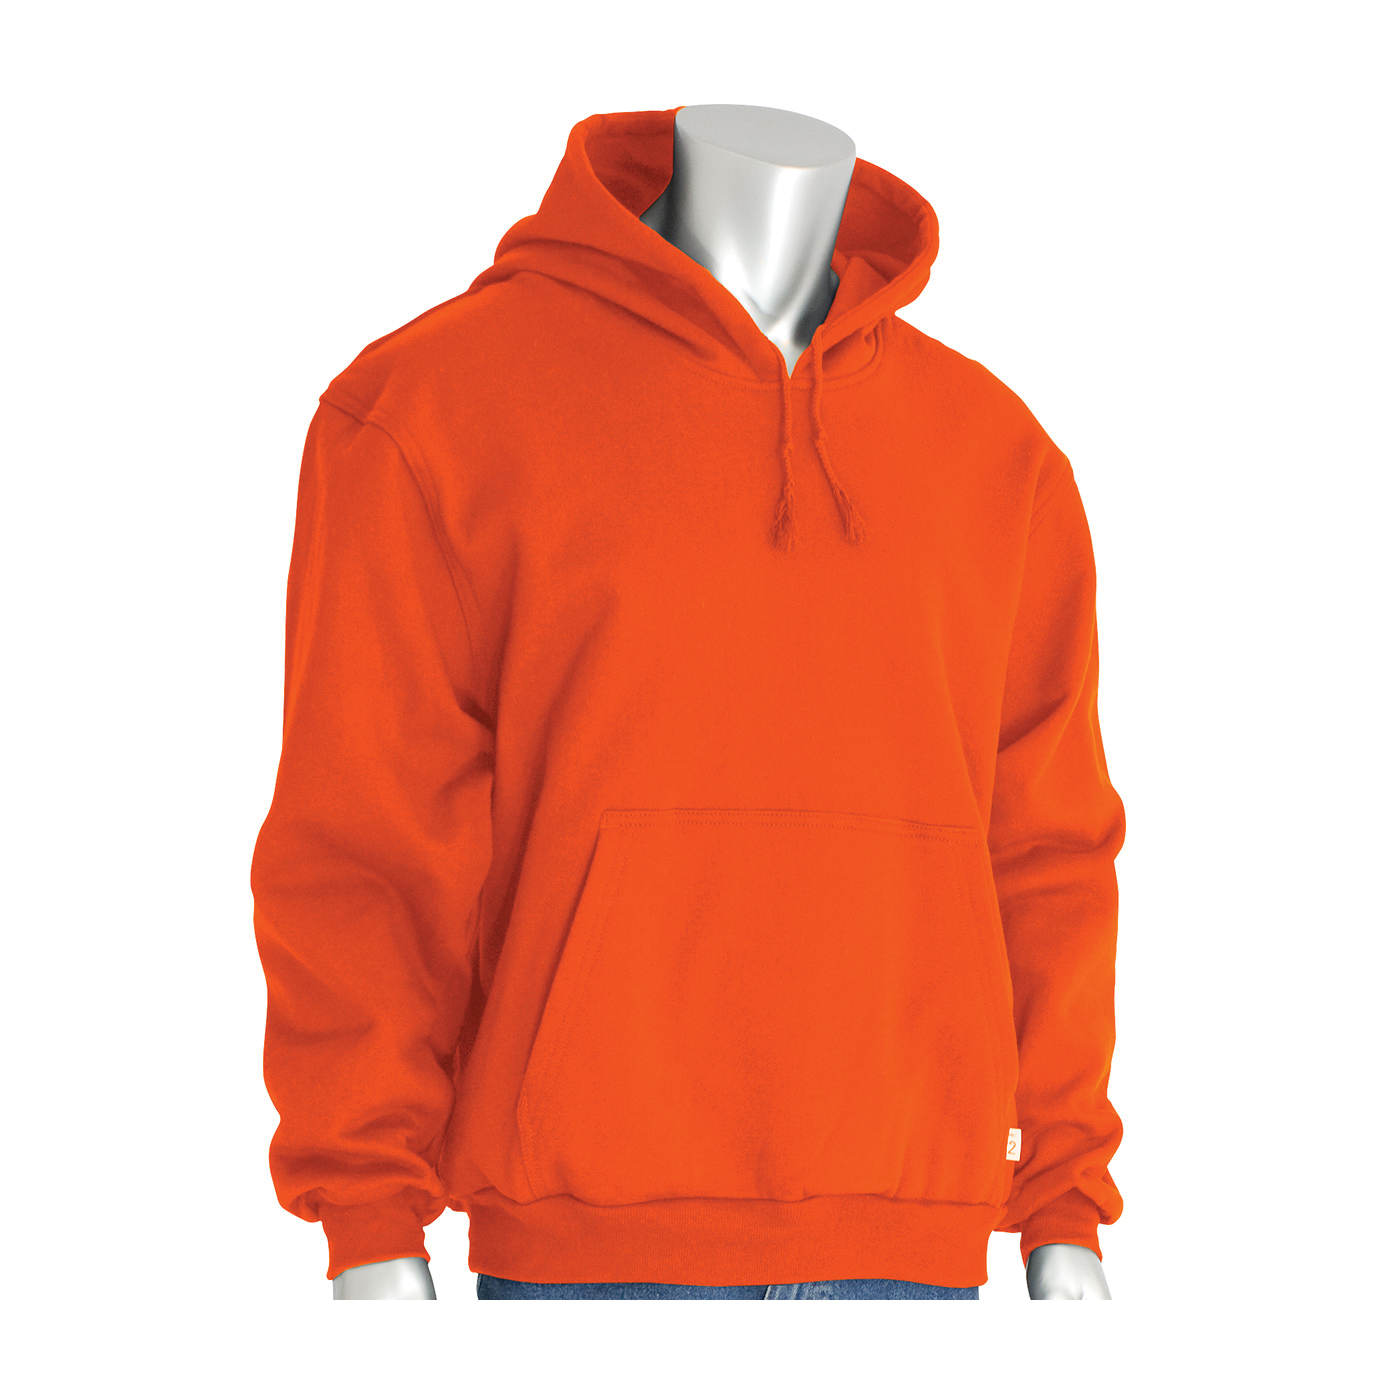 PIP® 385-FRPH-OR/L Polartec® 385-FRPH Arc and Flame Resistant Sweatshirt, L, Orange, FR Fleece Knit/100% Cotton, 31 in Regular, 32 in Tall L